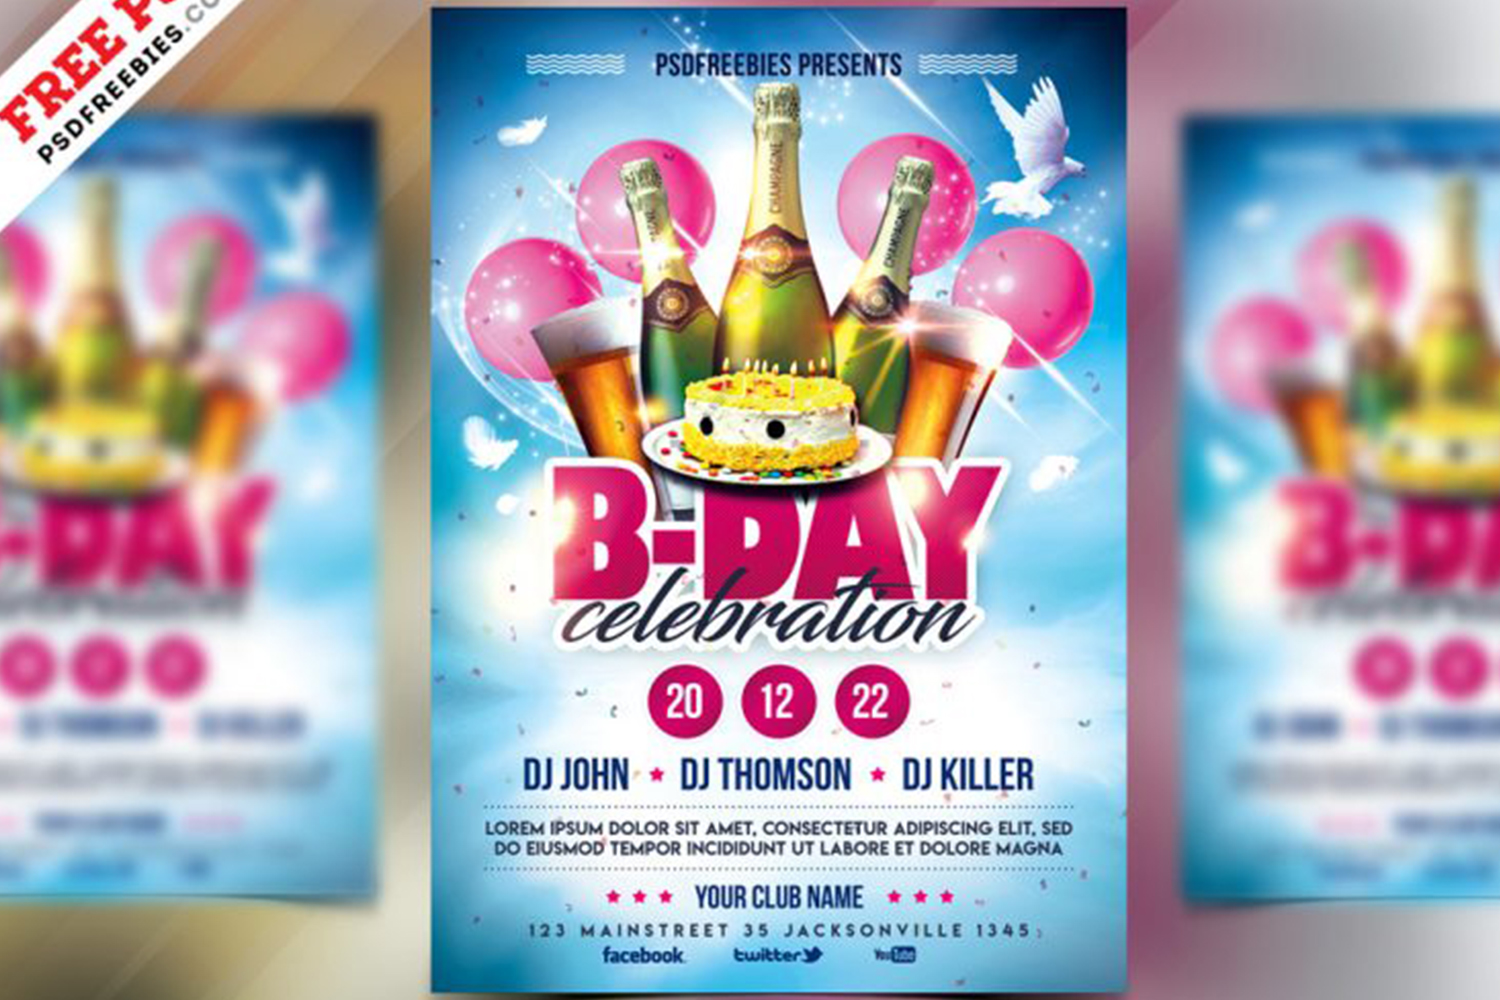 Birthday Party Celebration Flyer Design PSD Free Download